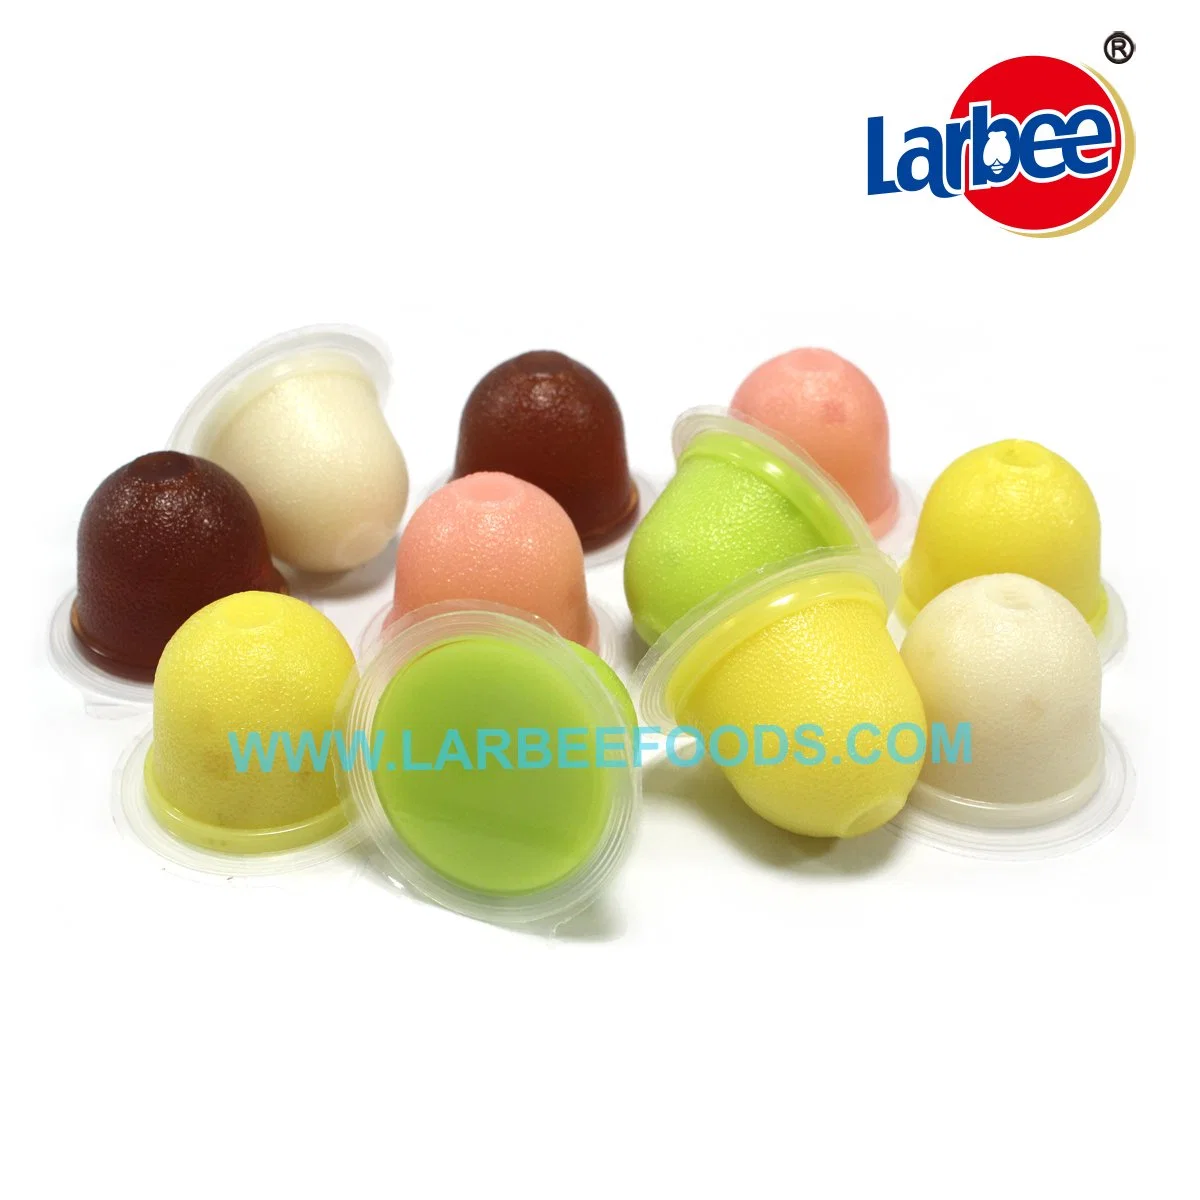 Larbee Wholesale/Supplier Snack Food 45g Konjac Jelly in Bulk Package